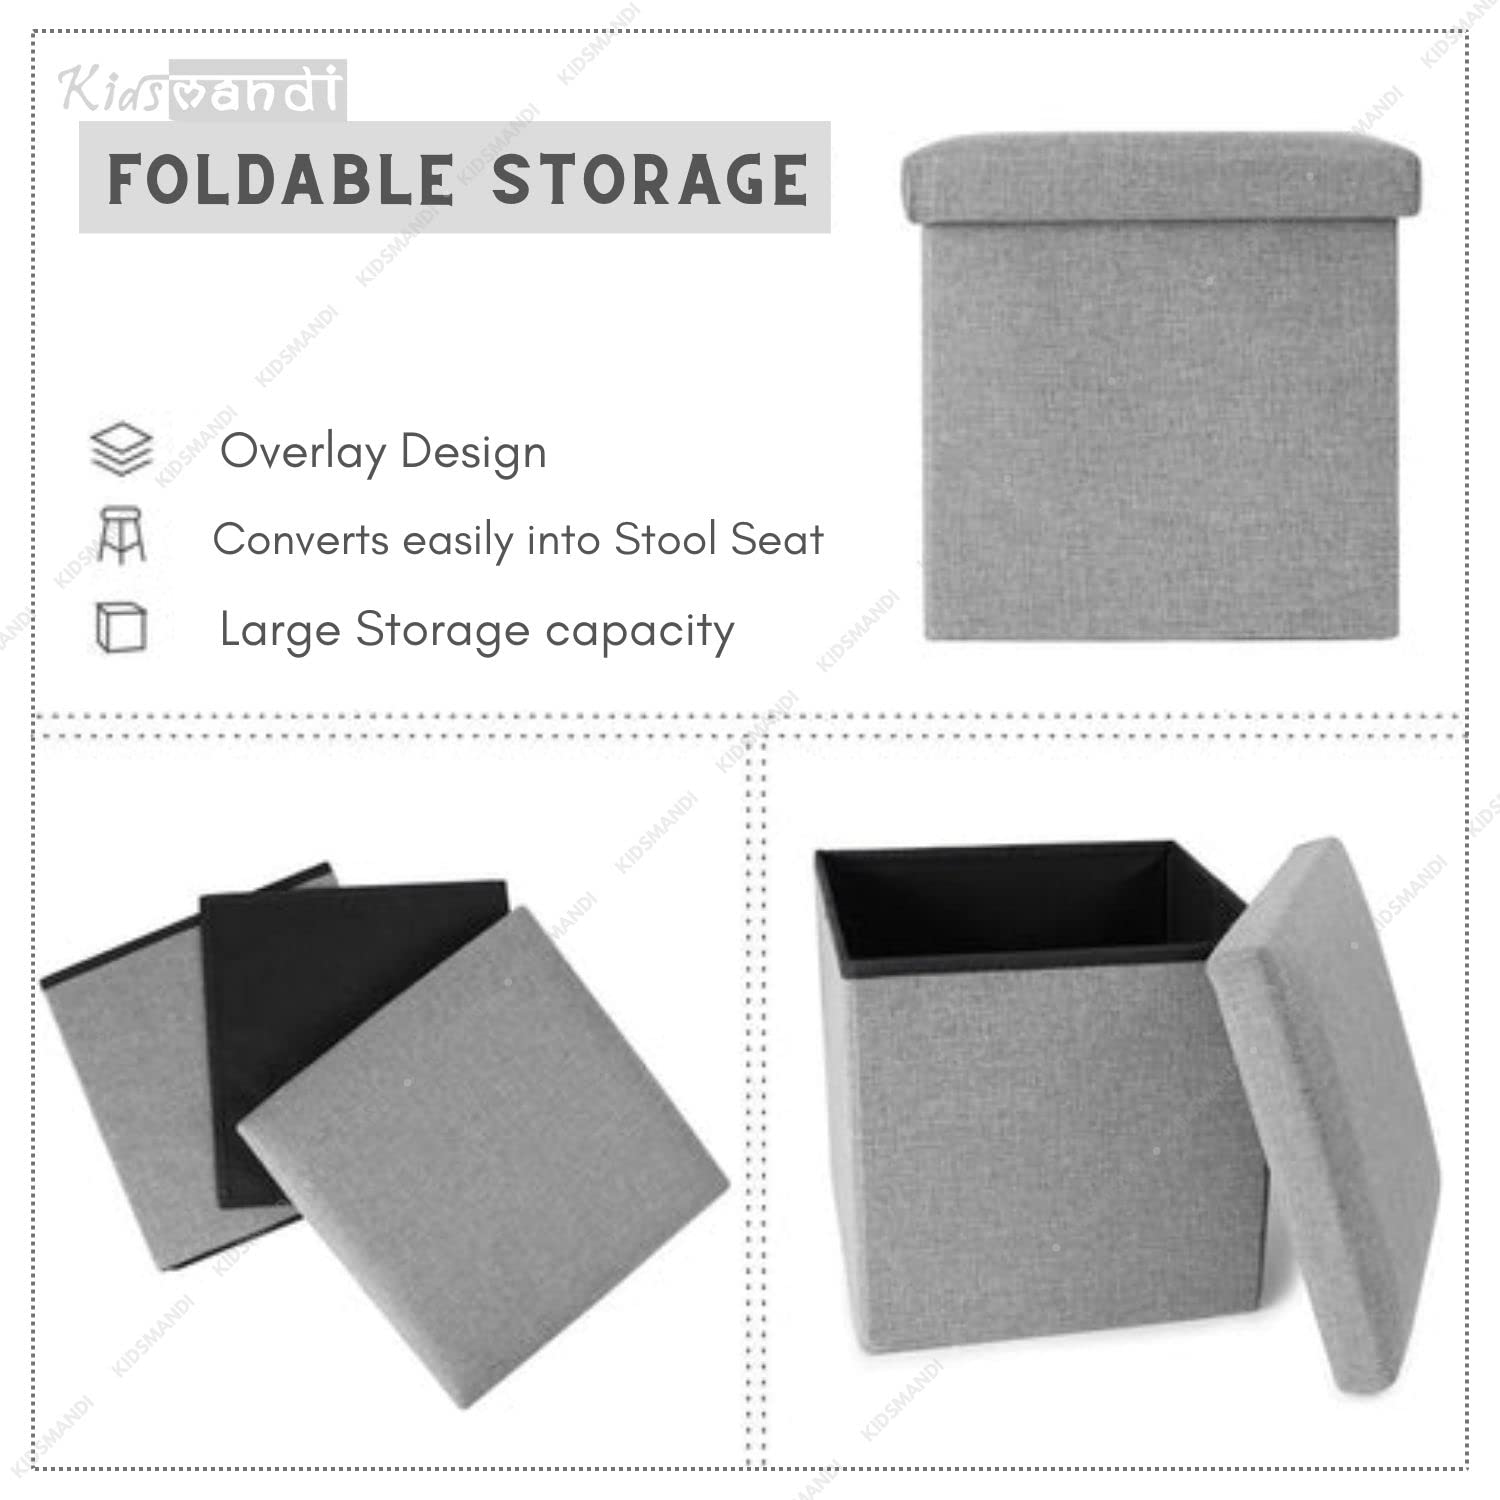 Kids Mandi cube shape stool with storage and cushion, versatile design.